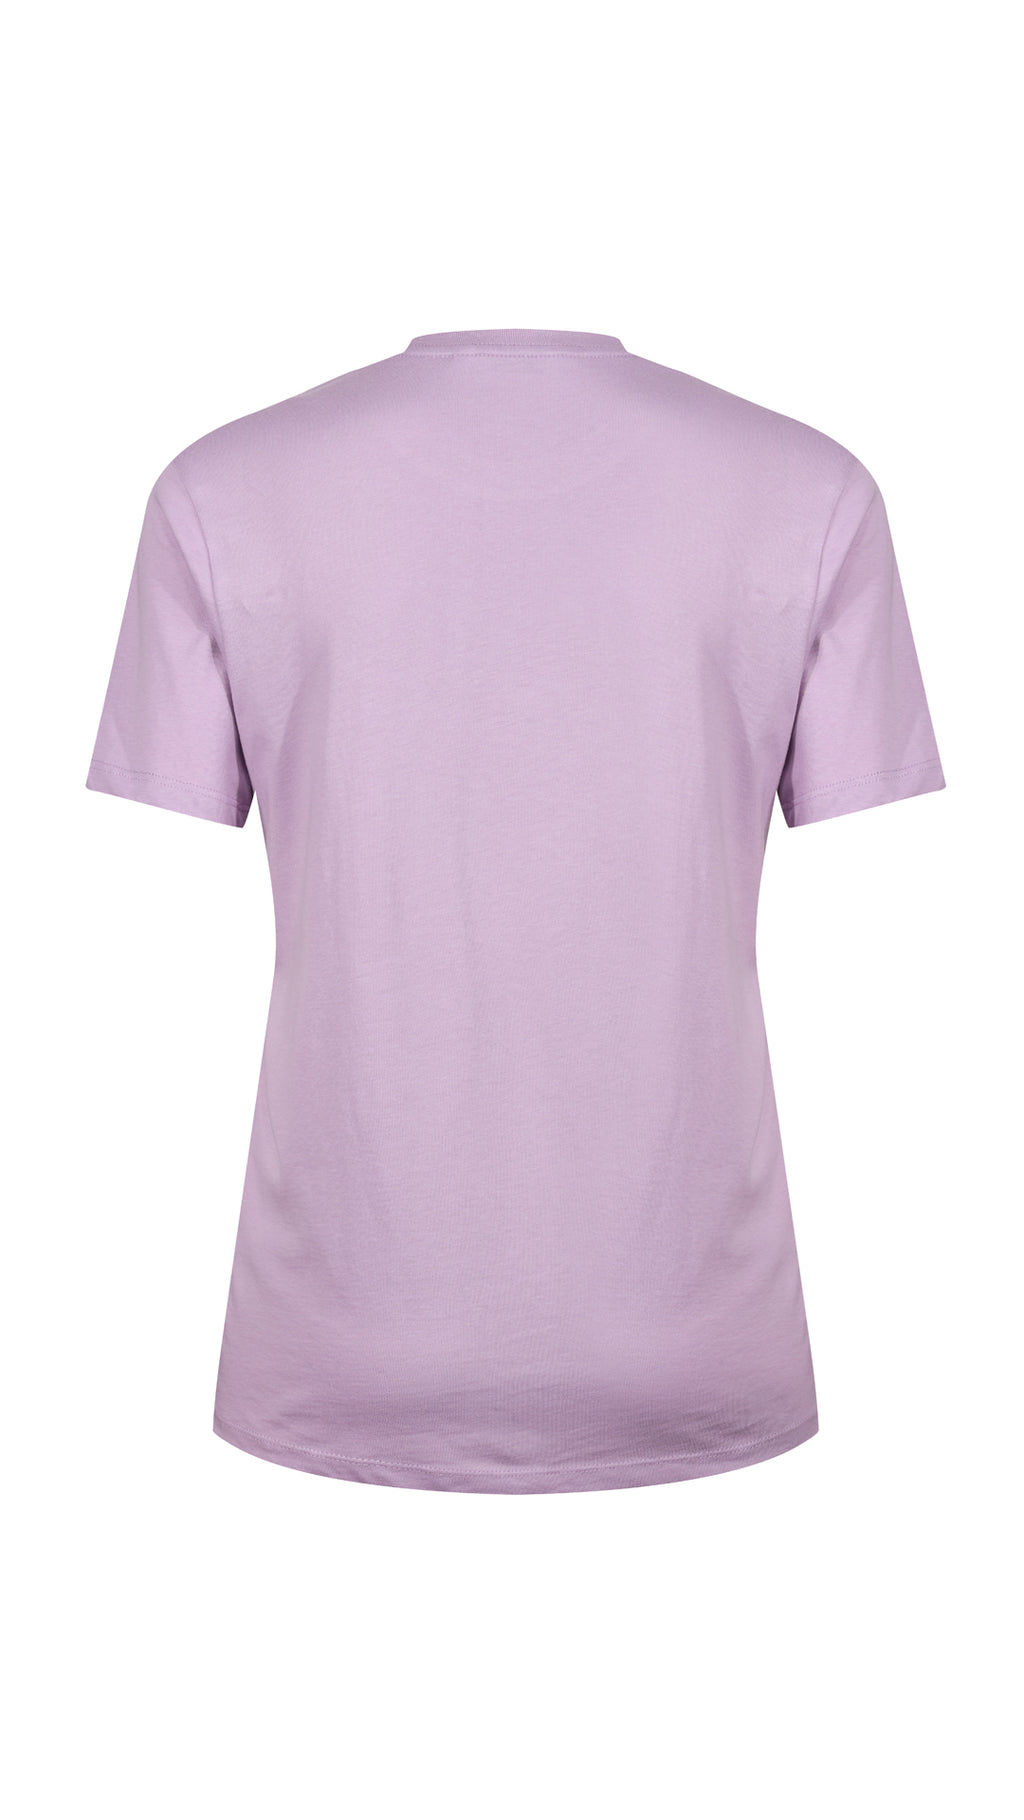 Amalfi Lavender Printed T-shirt